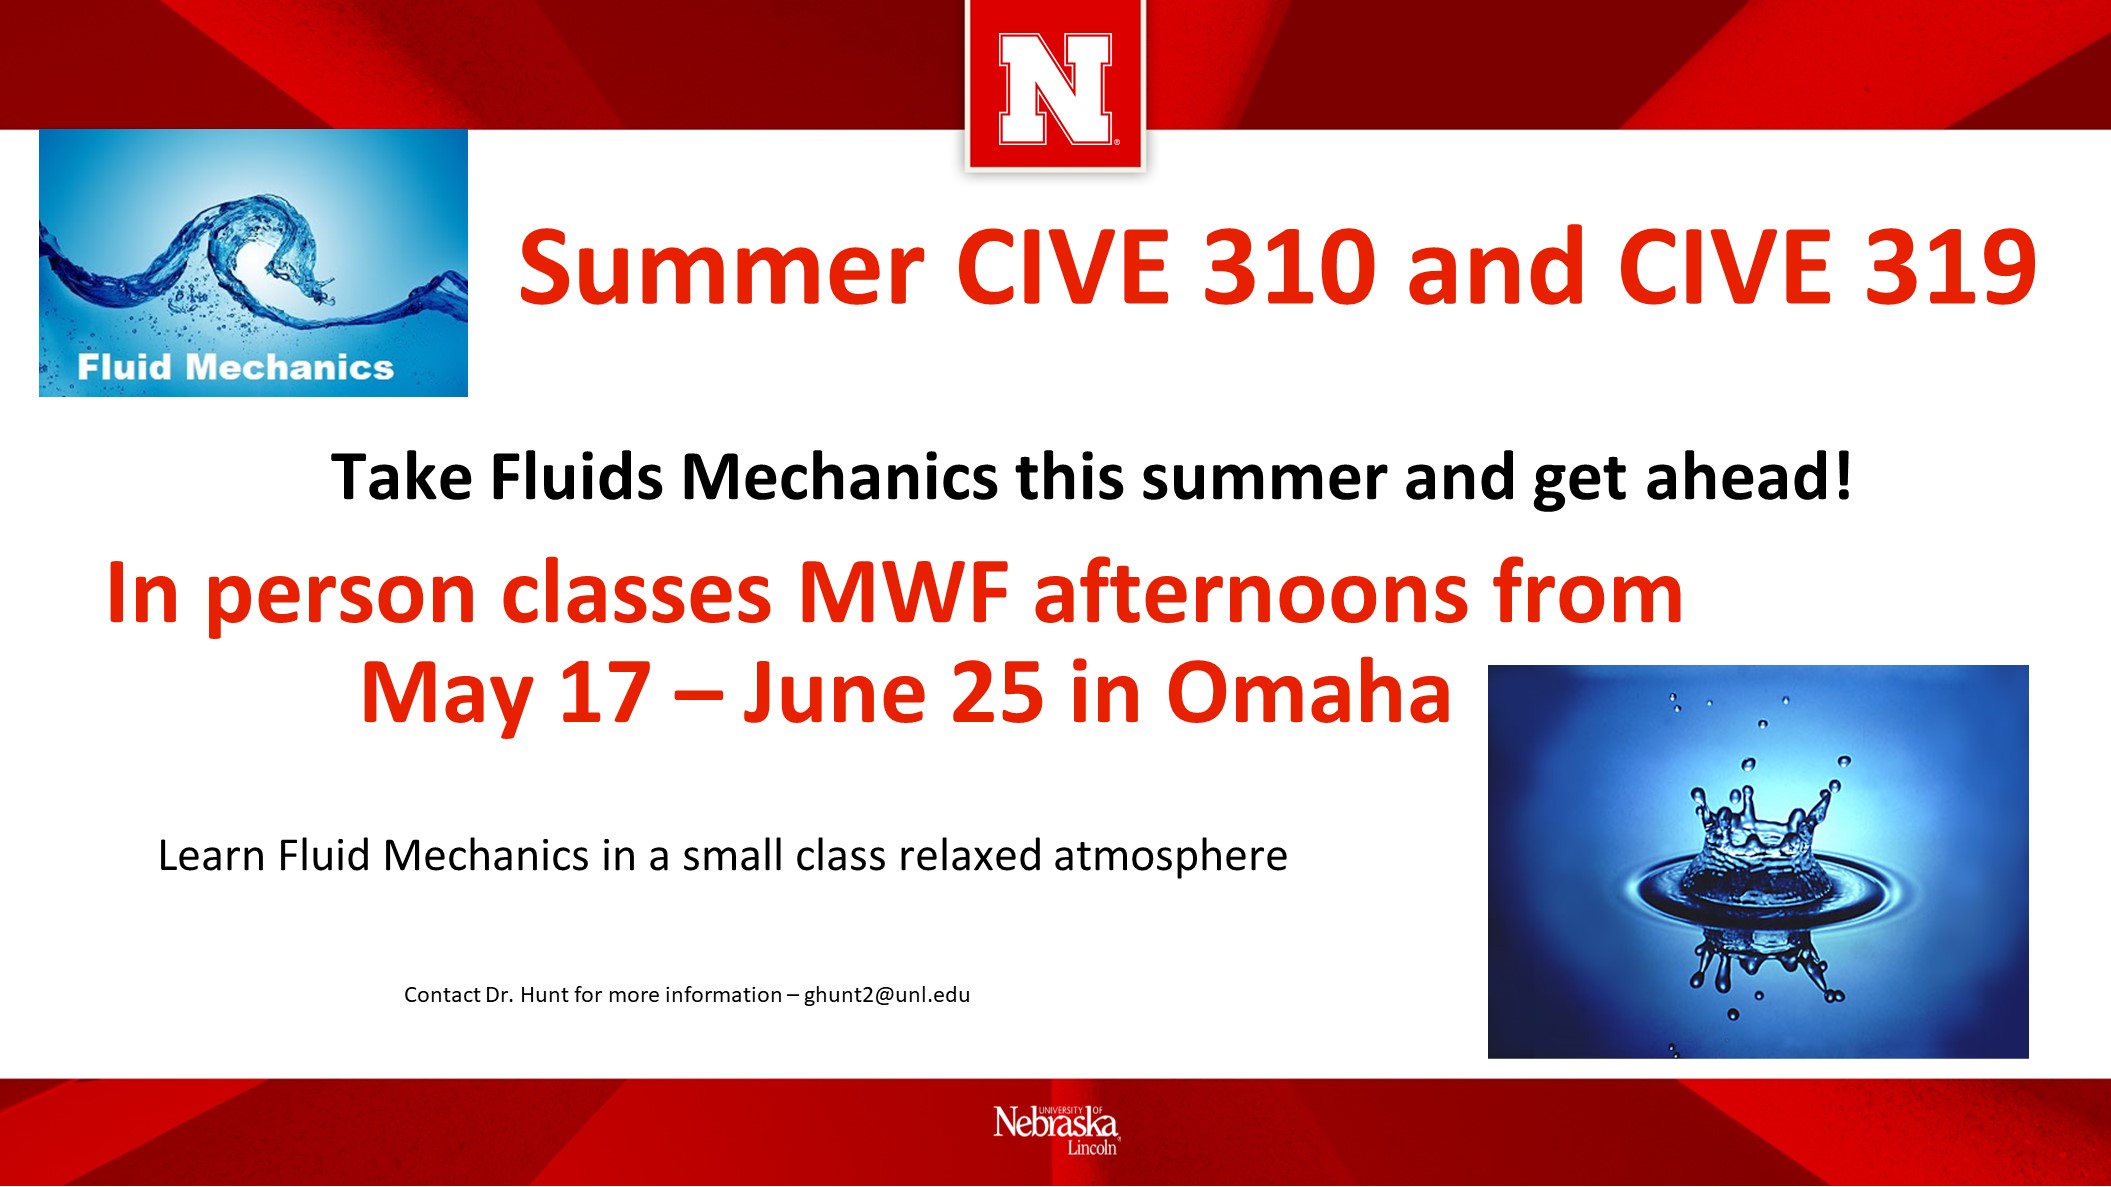 Summer Class Fluid Mechanics (CIVE 310 and CIVE 319) Announce